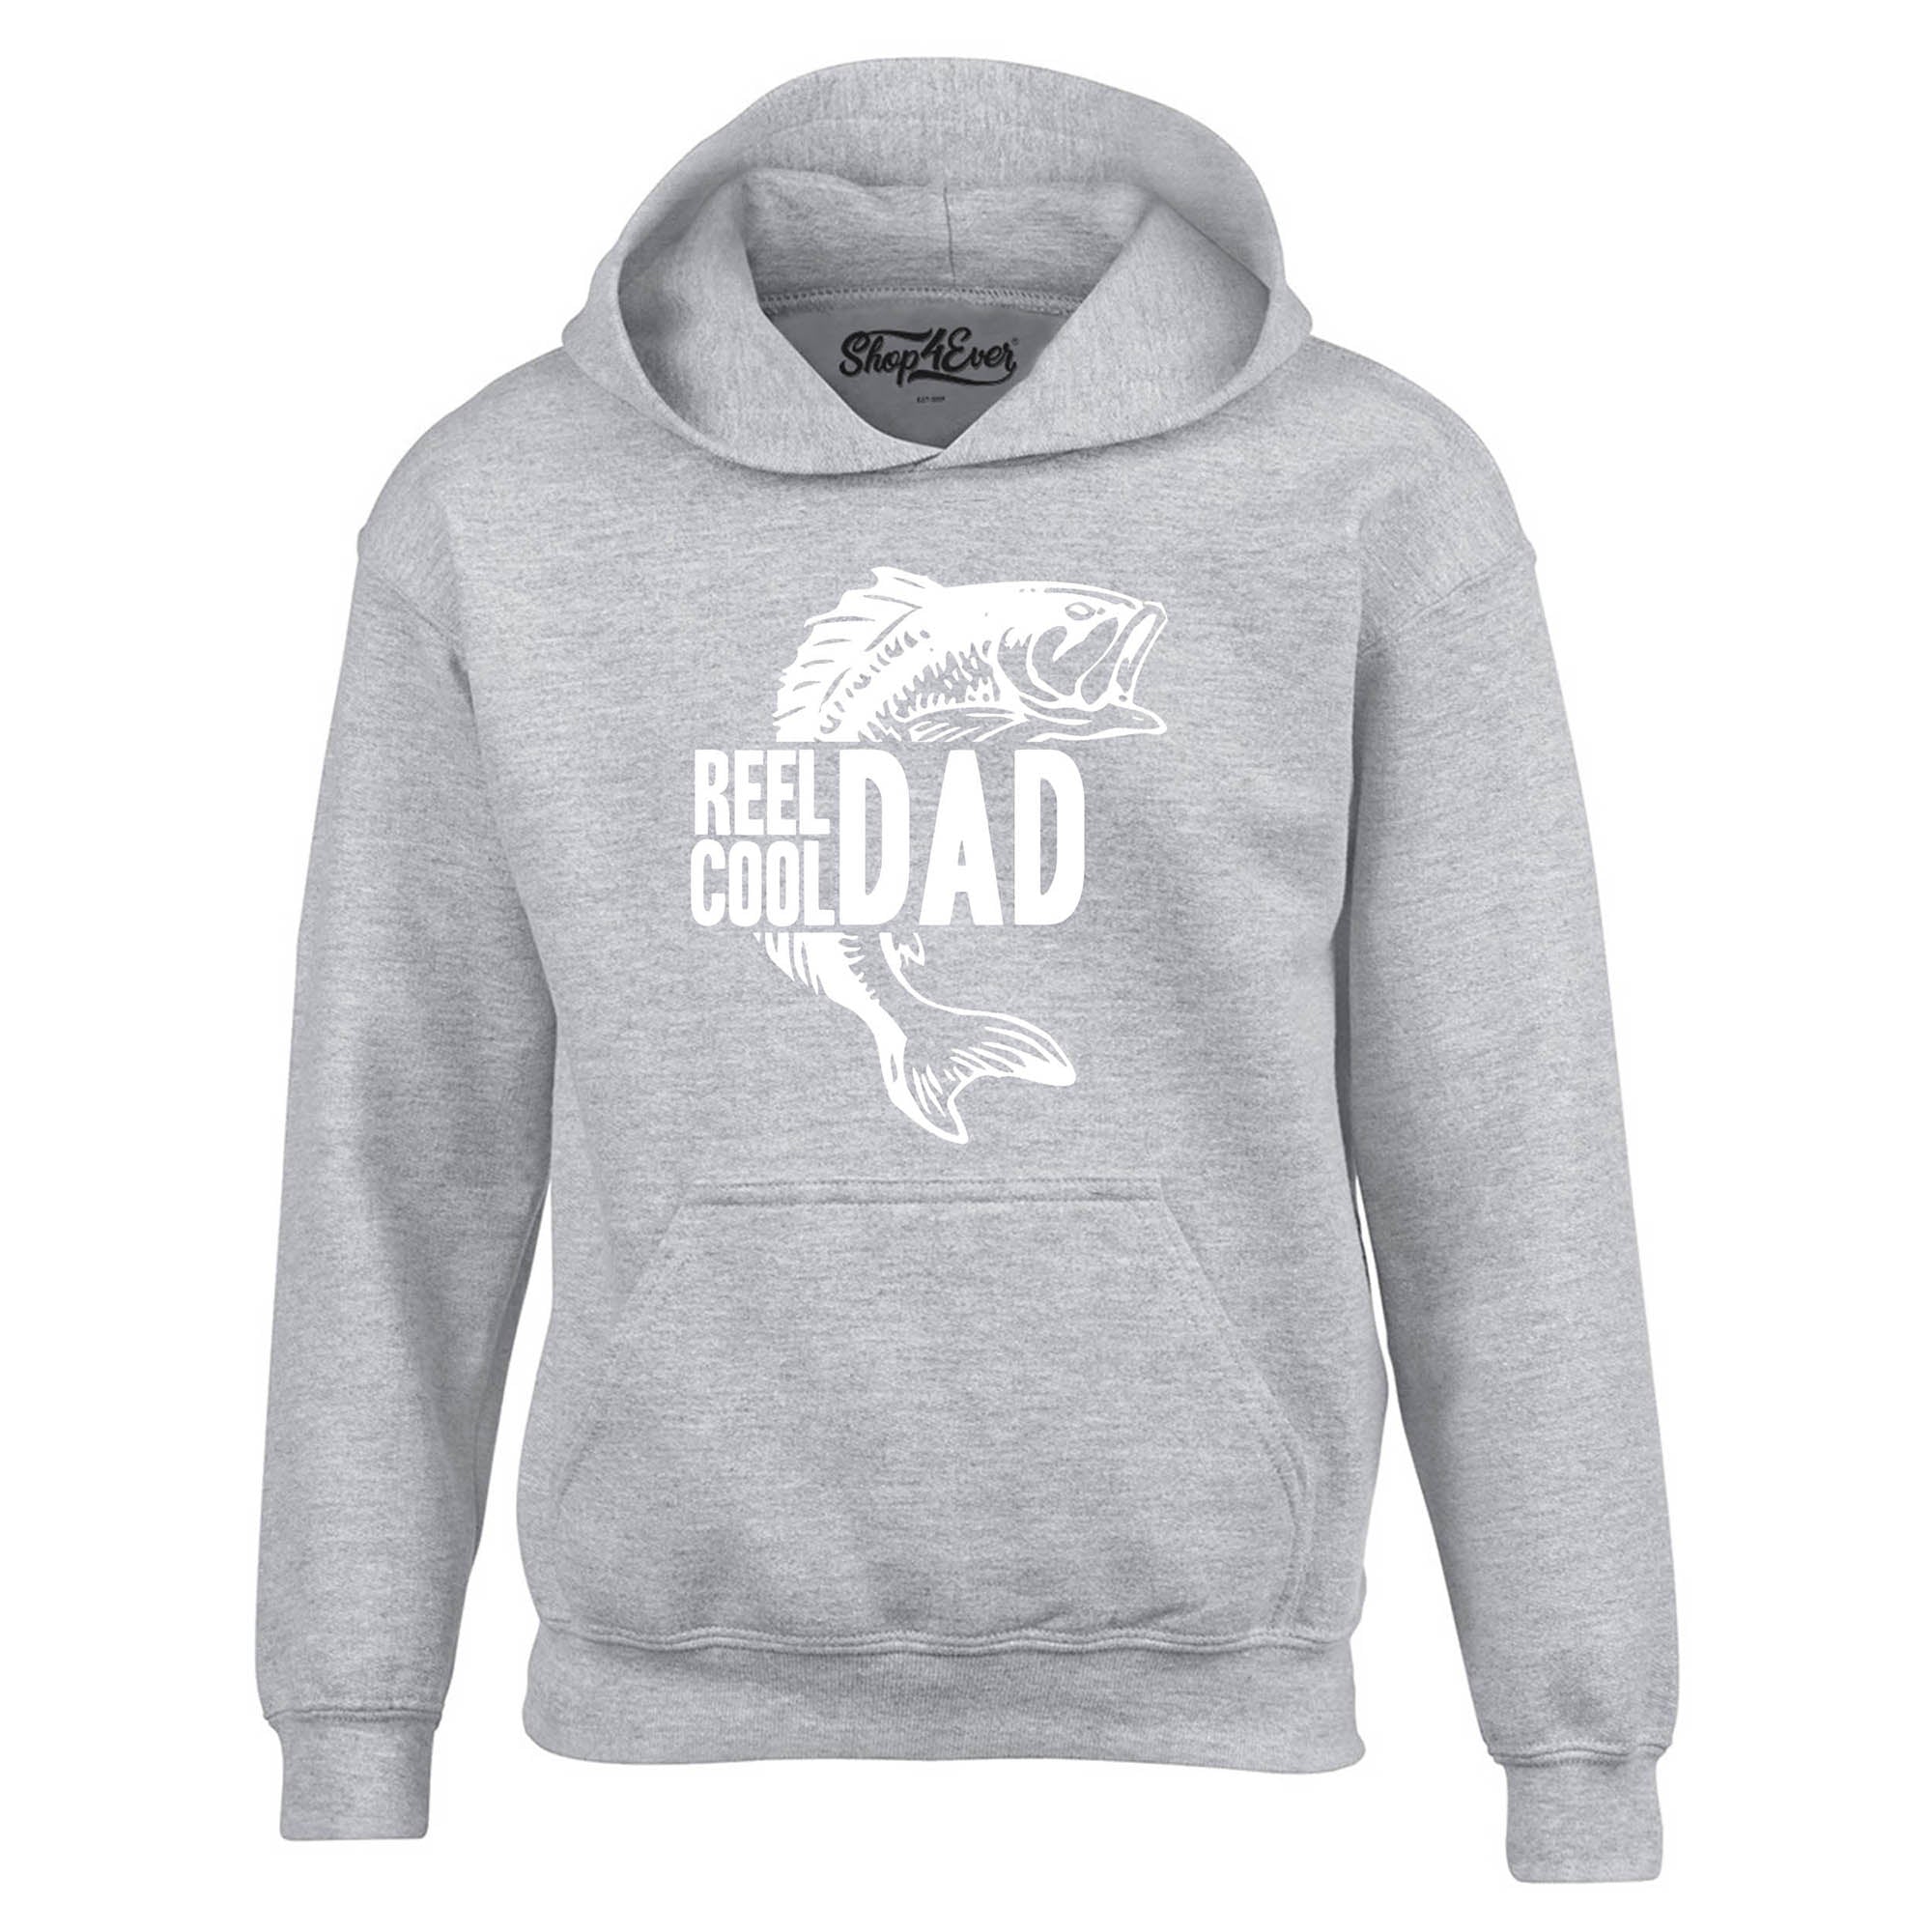 Reel Cool Dad Fishing Lake Hoodie Sweatshirts